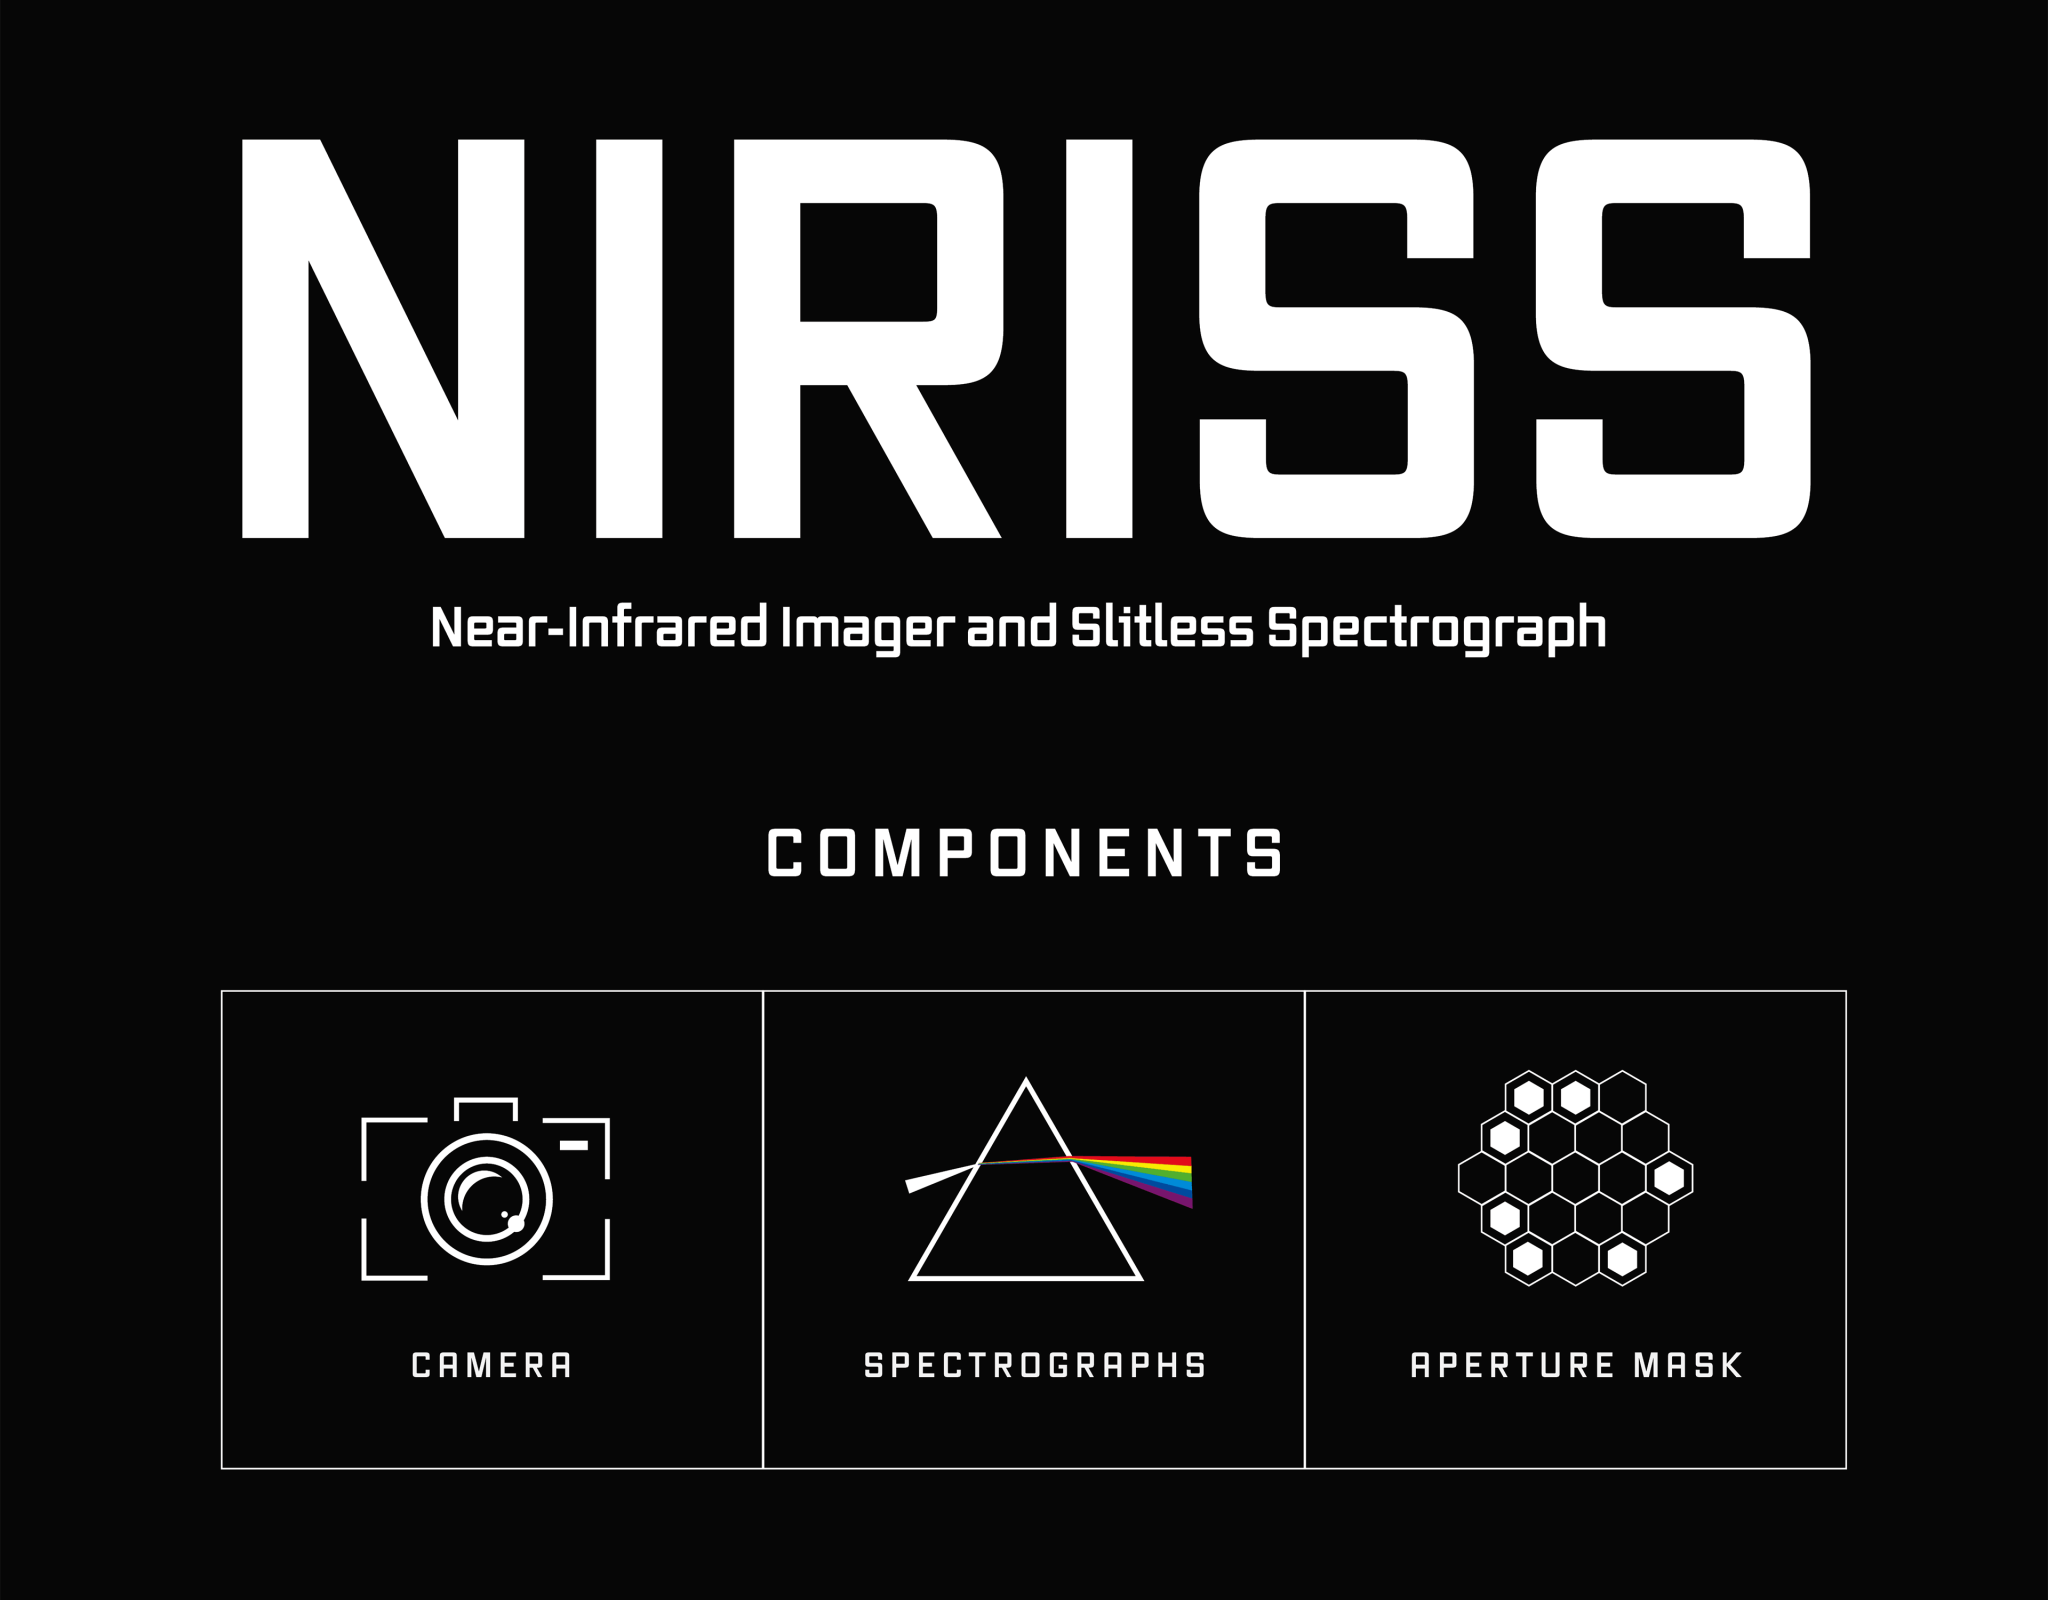 James Webb Space Telescope NIRISS Infographic Crop